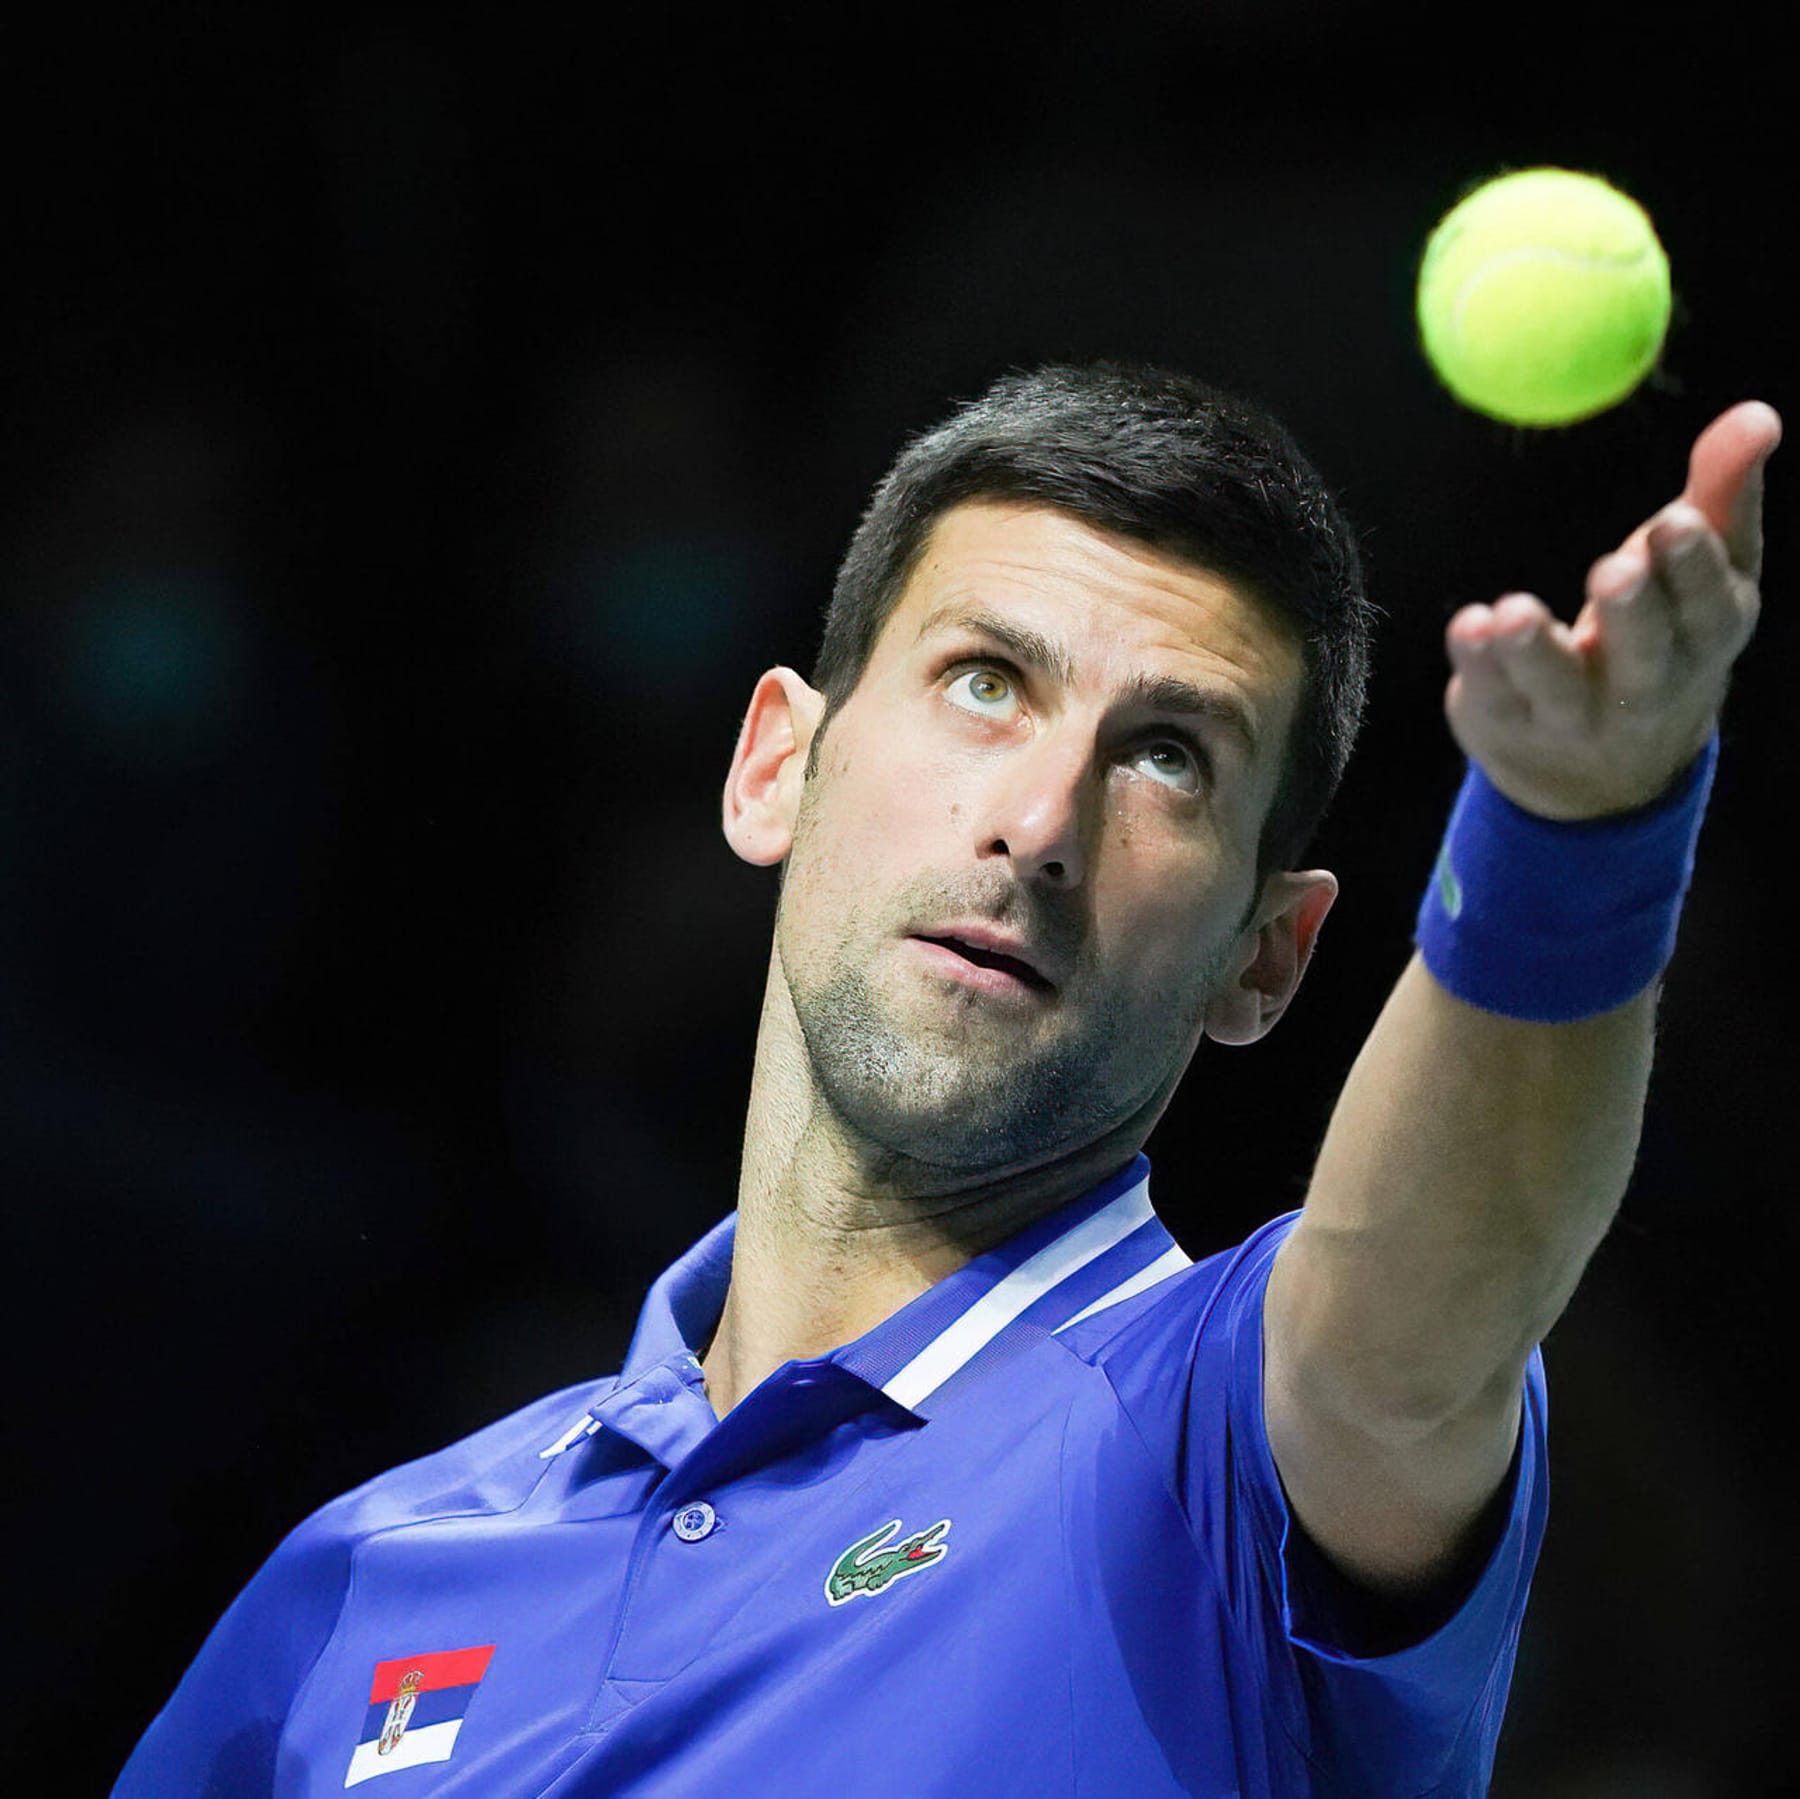 Teilnahme an Australian Open? Anhörung von Novak Djokovic wird live übertragen